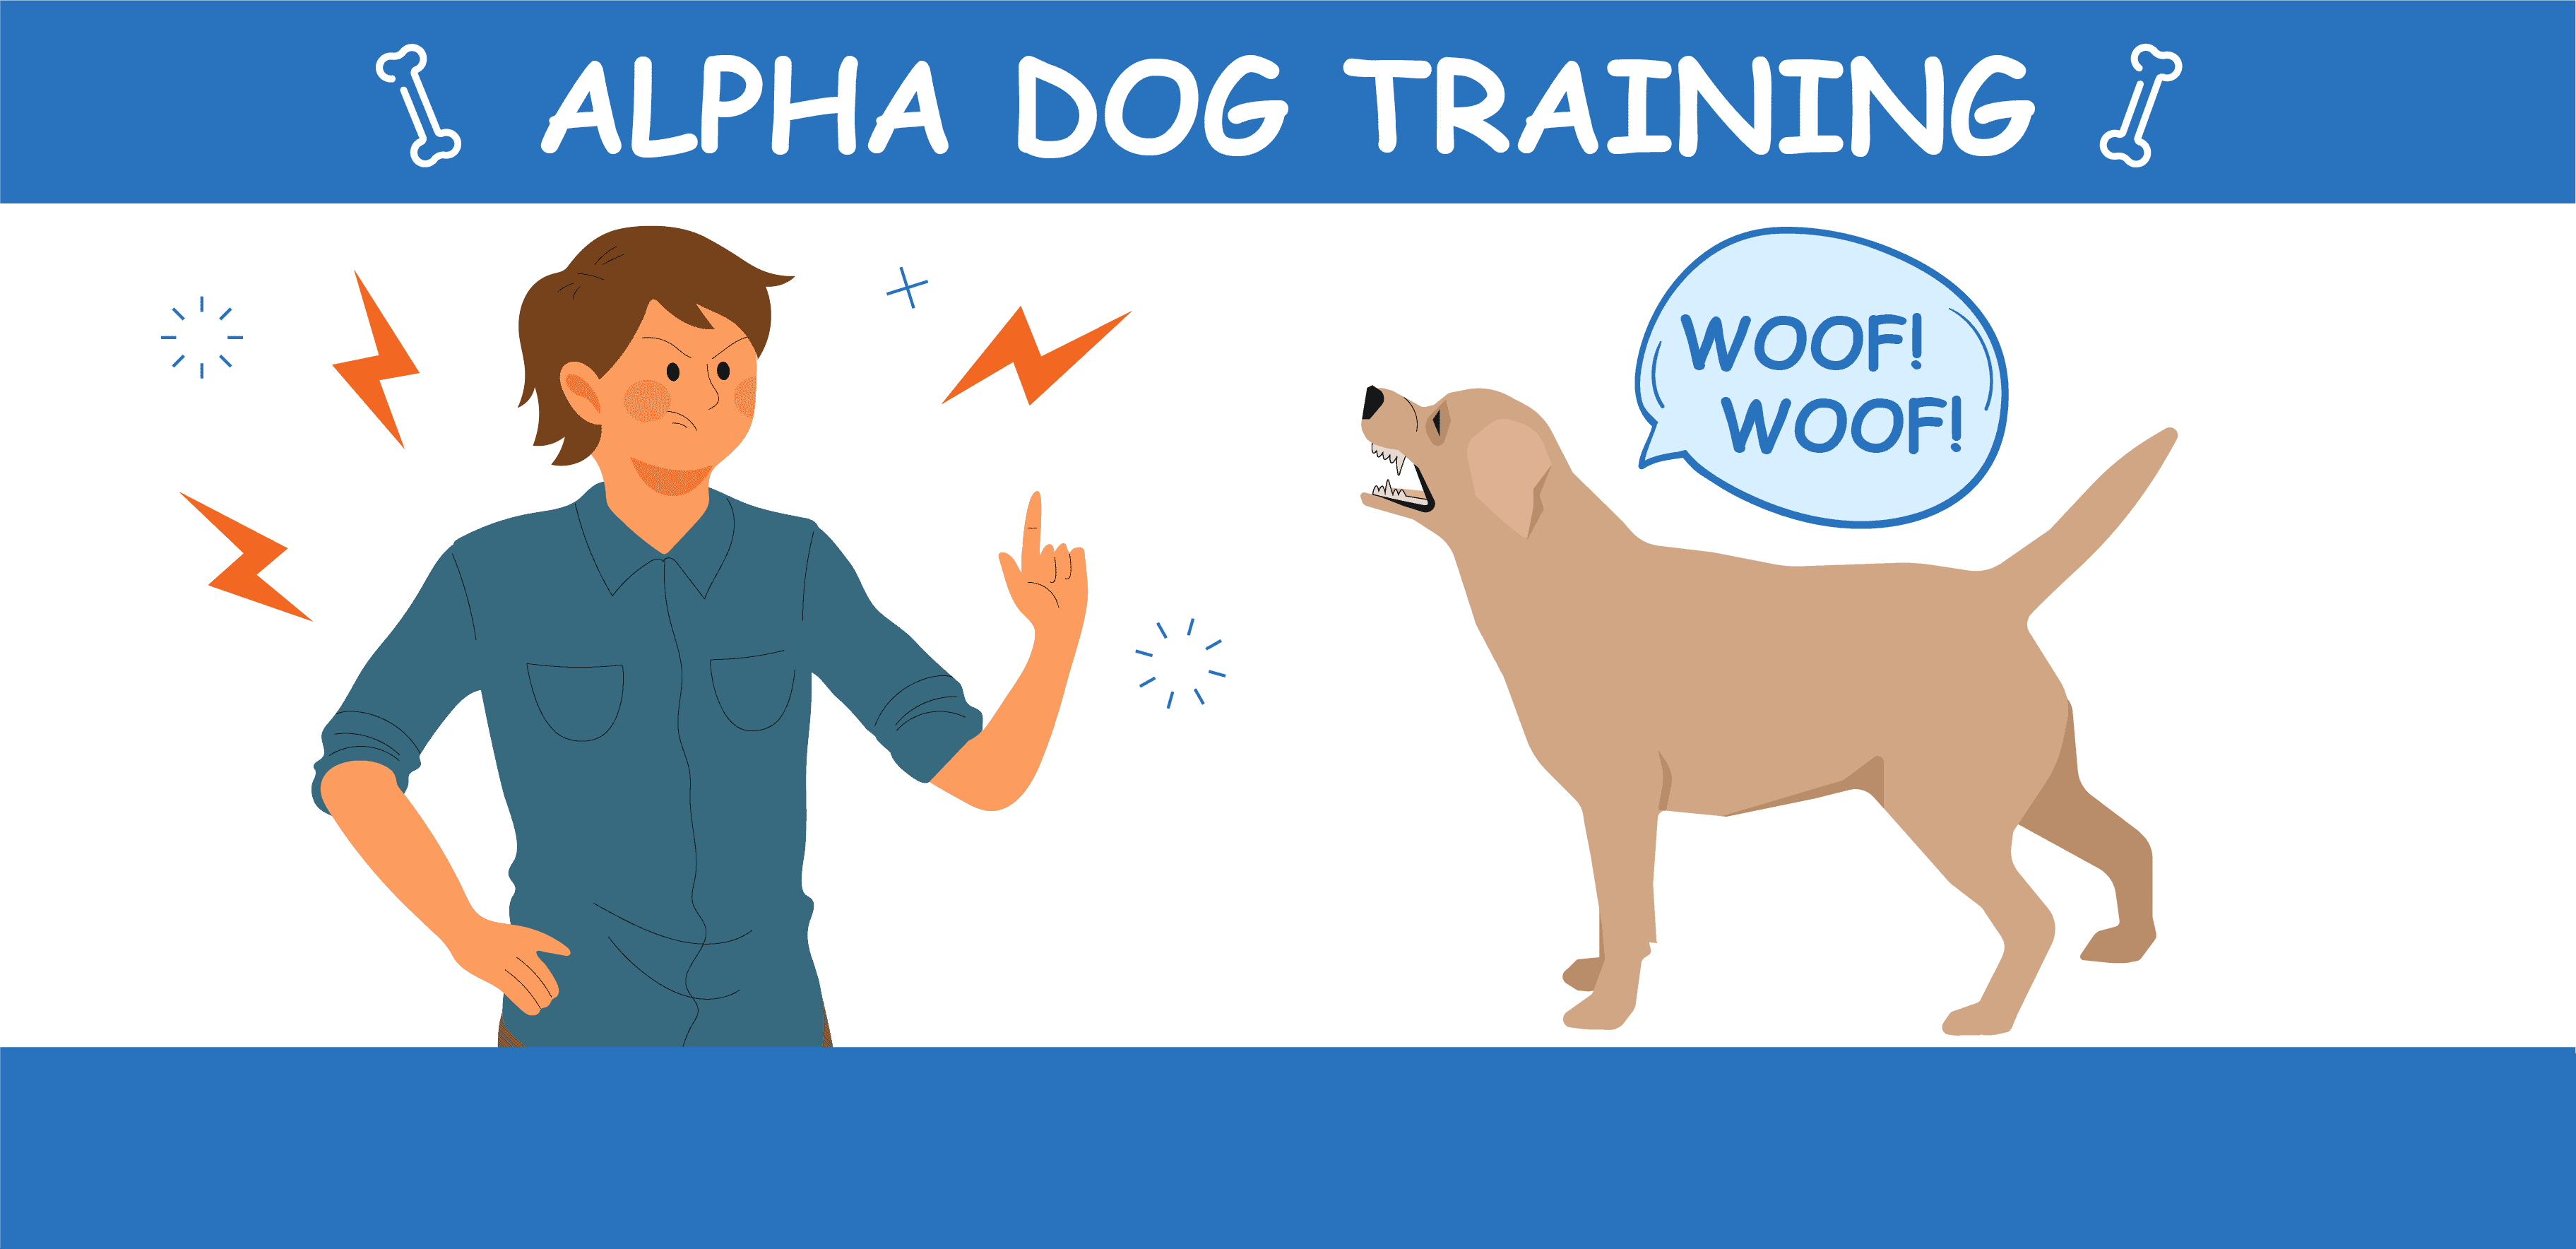 K9-coach Dog Obedience Training